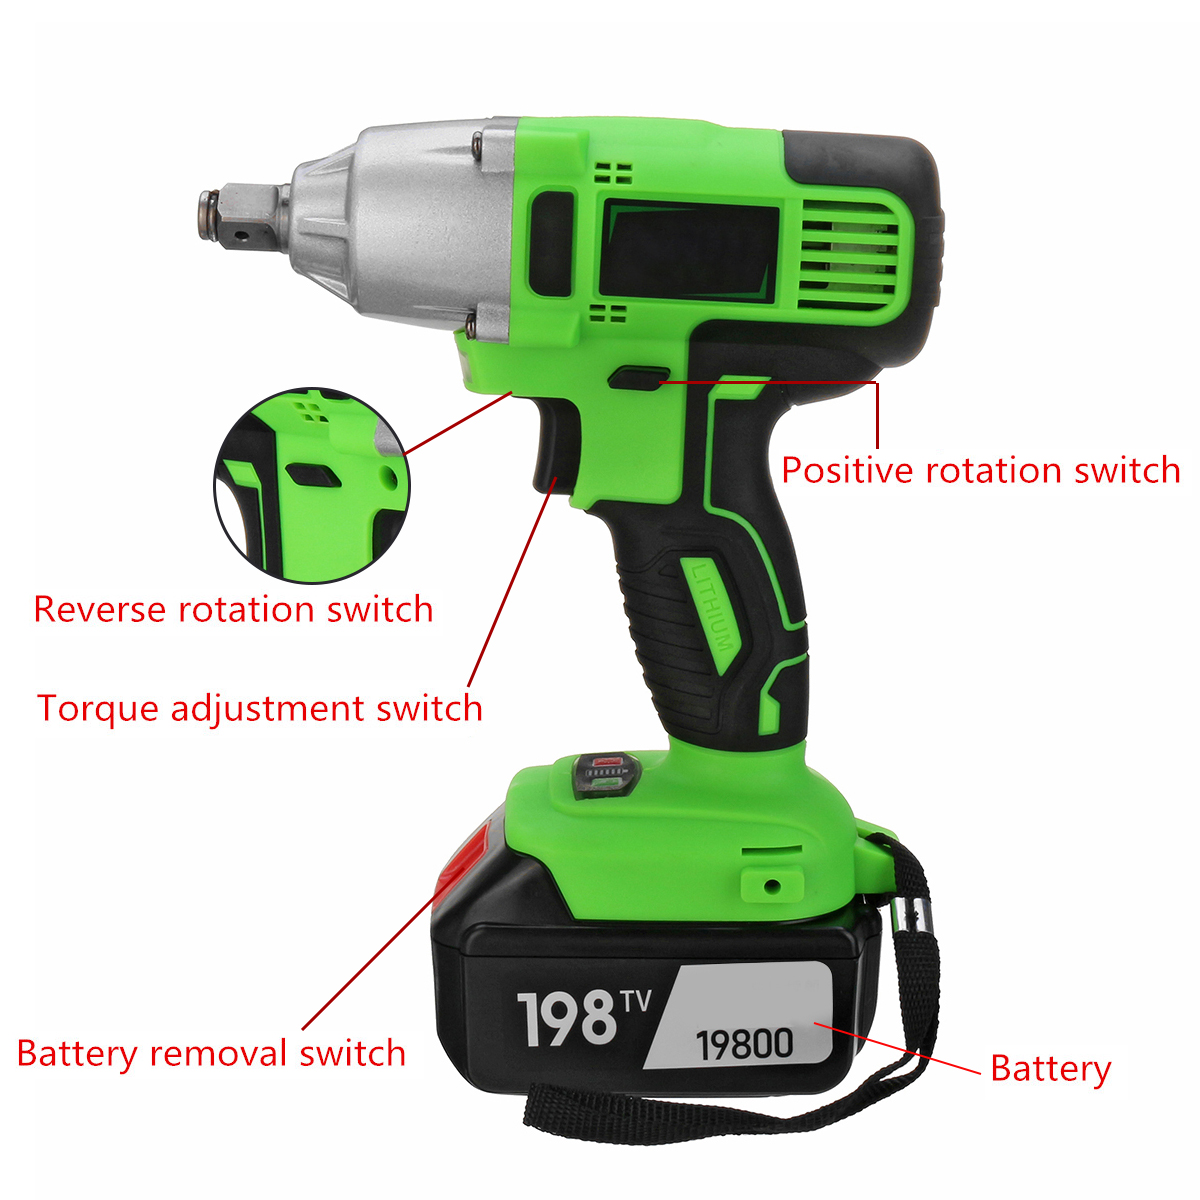 198VF-19800mAh-Electric-Cordless-Impact-Wrench-LED-Lighting-Screwdriver-Drill-Torque-Repair-Tool-1457165-3